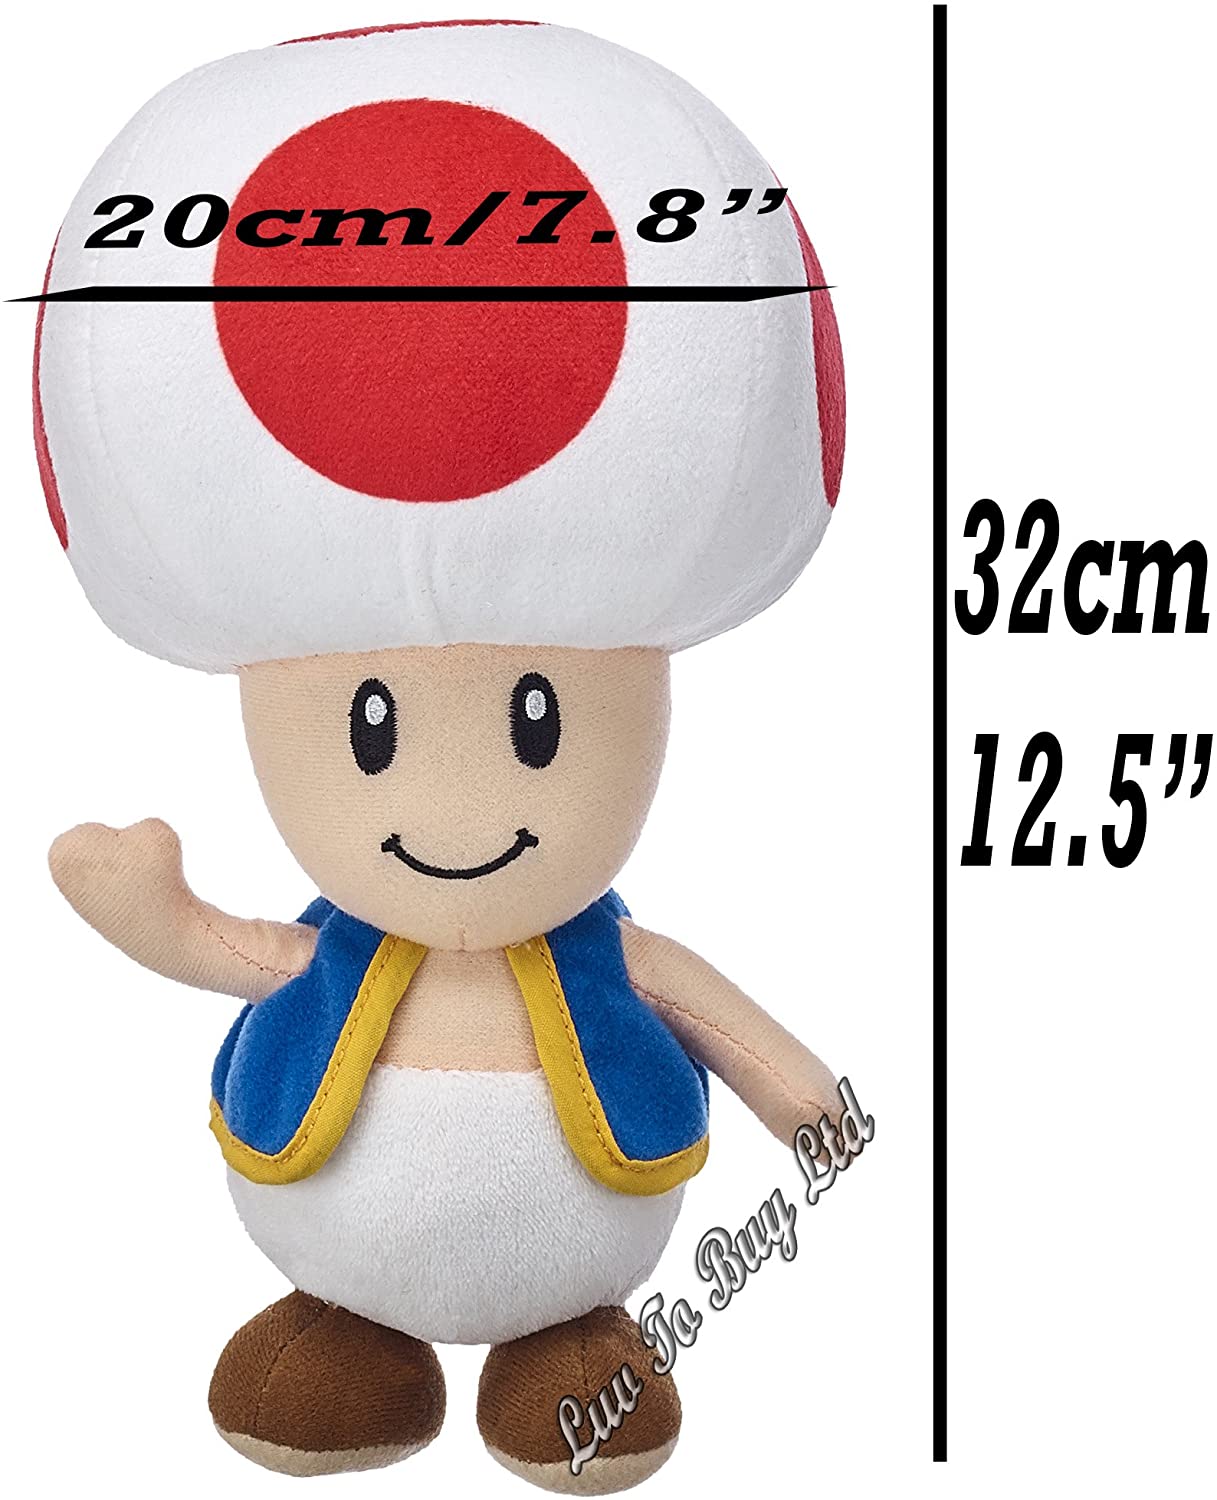 Super Mario Kong Luigi Toad Yoshiplushsoft Toys5 Characters Available Toad 32cm Bigamart 2806